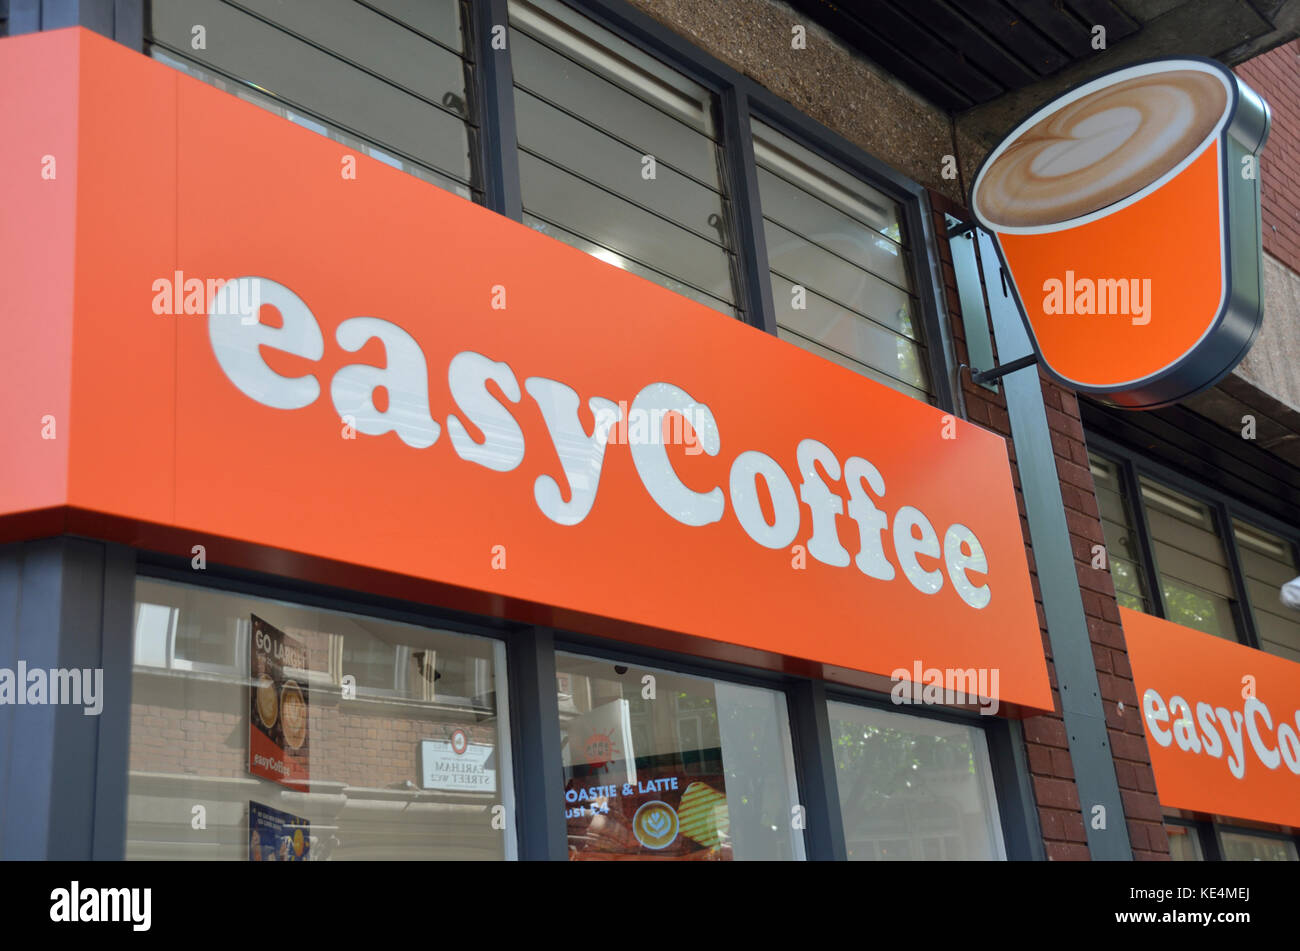 Easycoffee cafe Exterieur, London, UK. Stockfoto